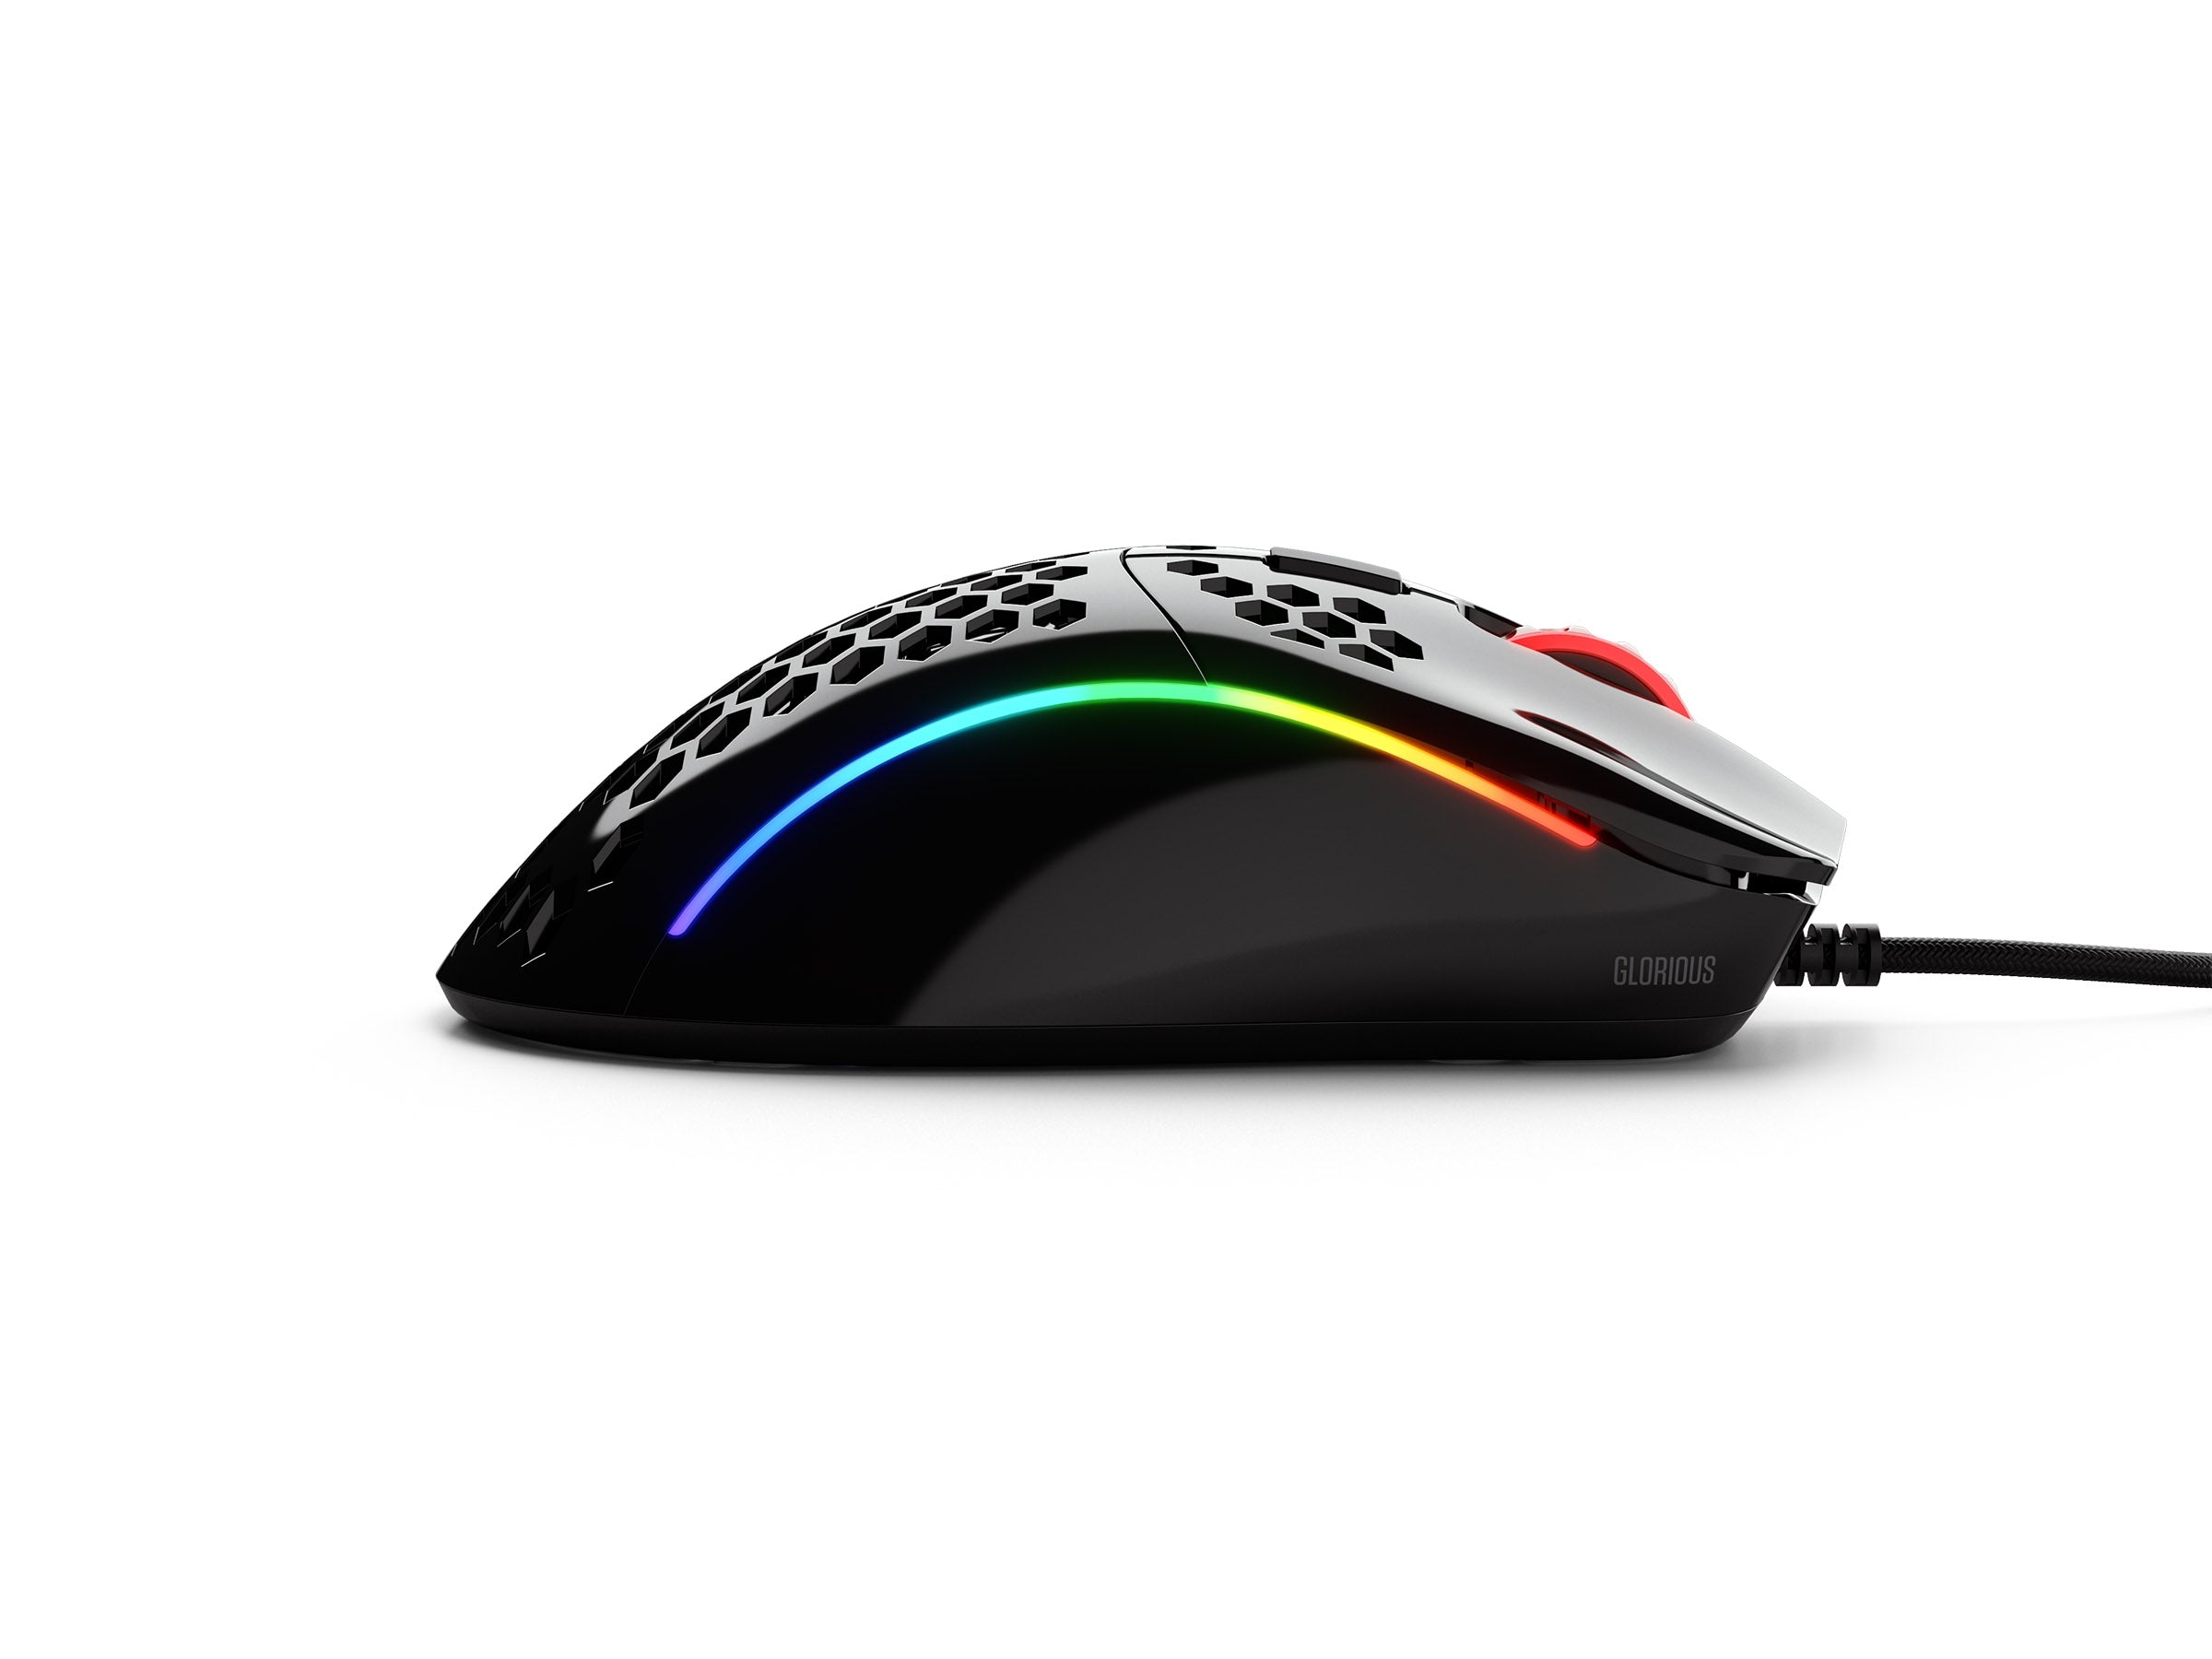 Glorious PC Model D Minus Glossy Black Ergonomic Lightweight Gaming Mouse MKLA1Y2HLB |27541|